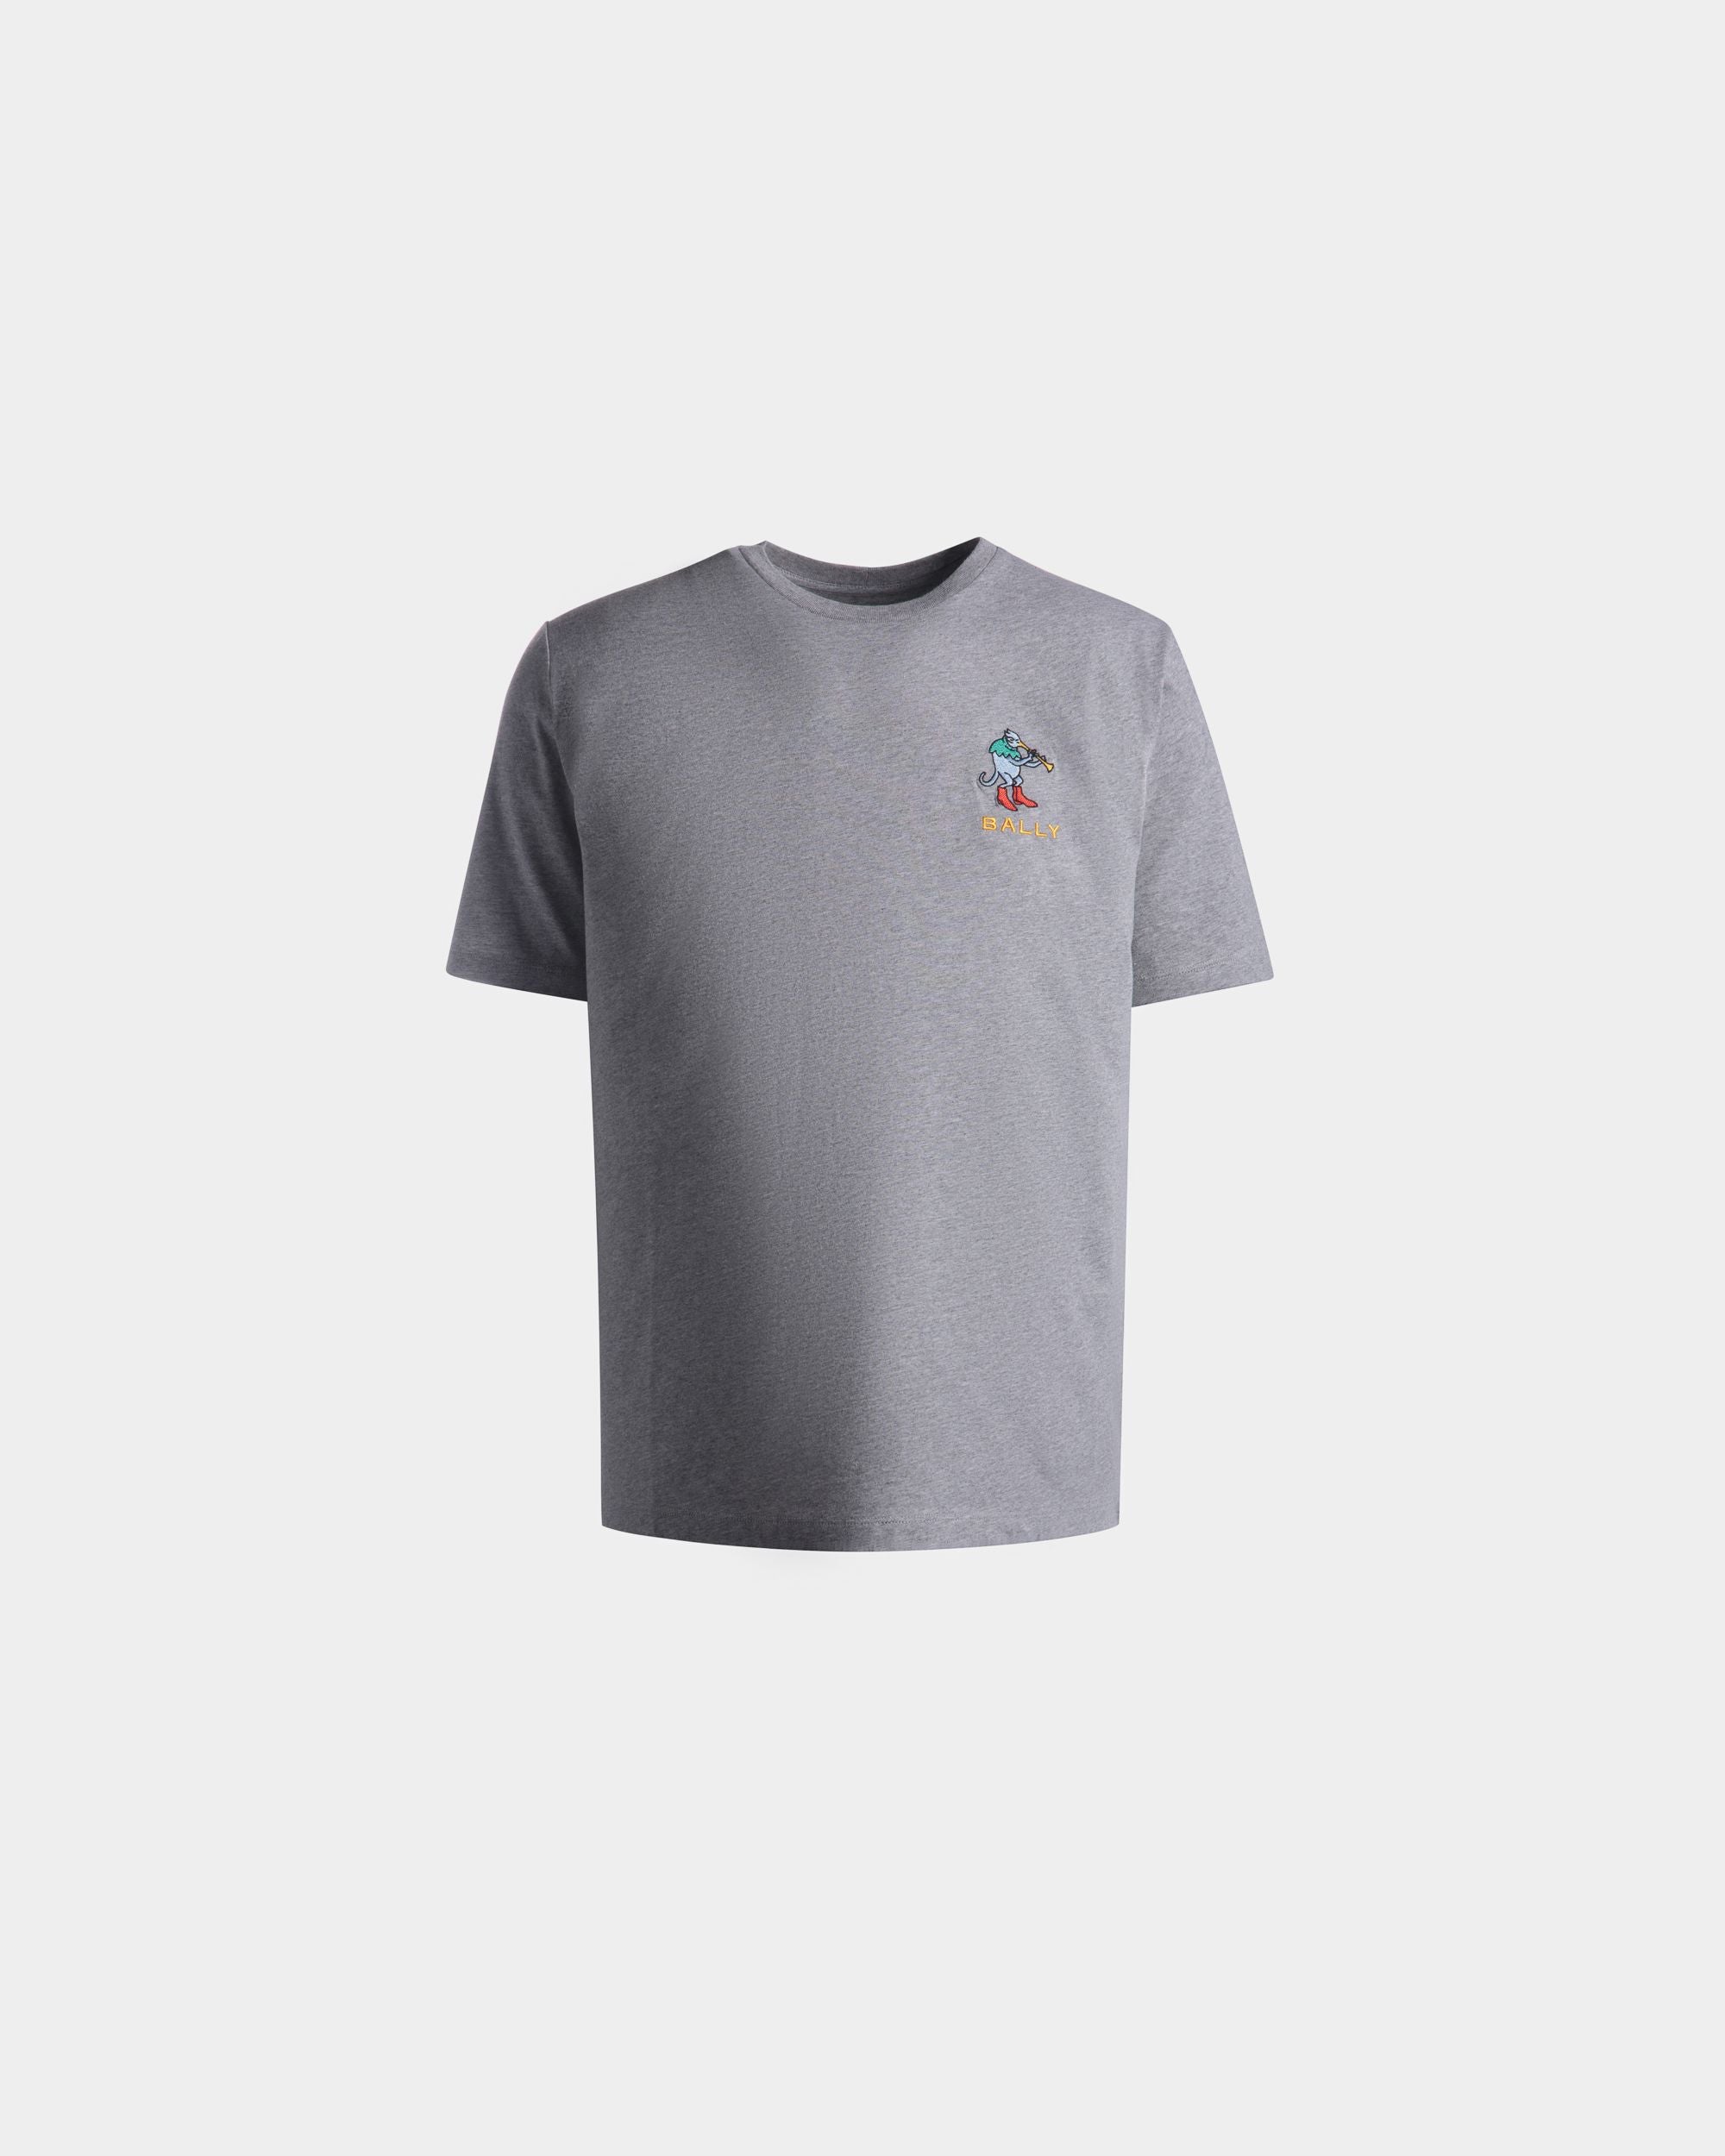 Men's T-Shirt in Grey Melange Cotton | Bally | Still Life Front